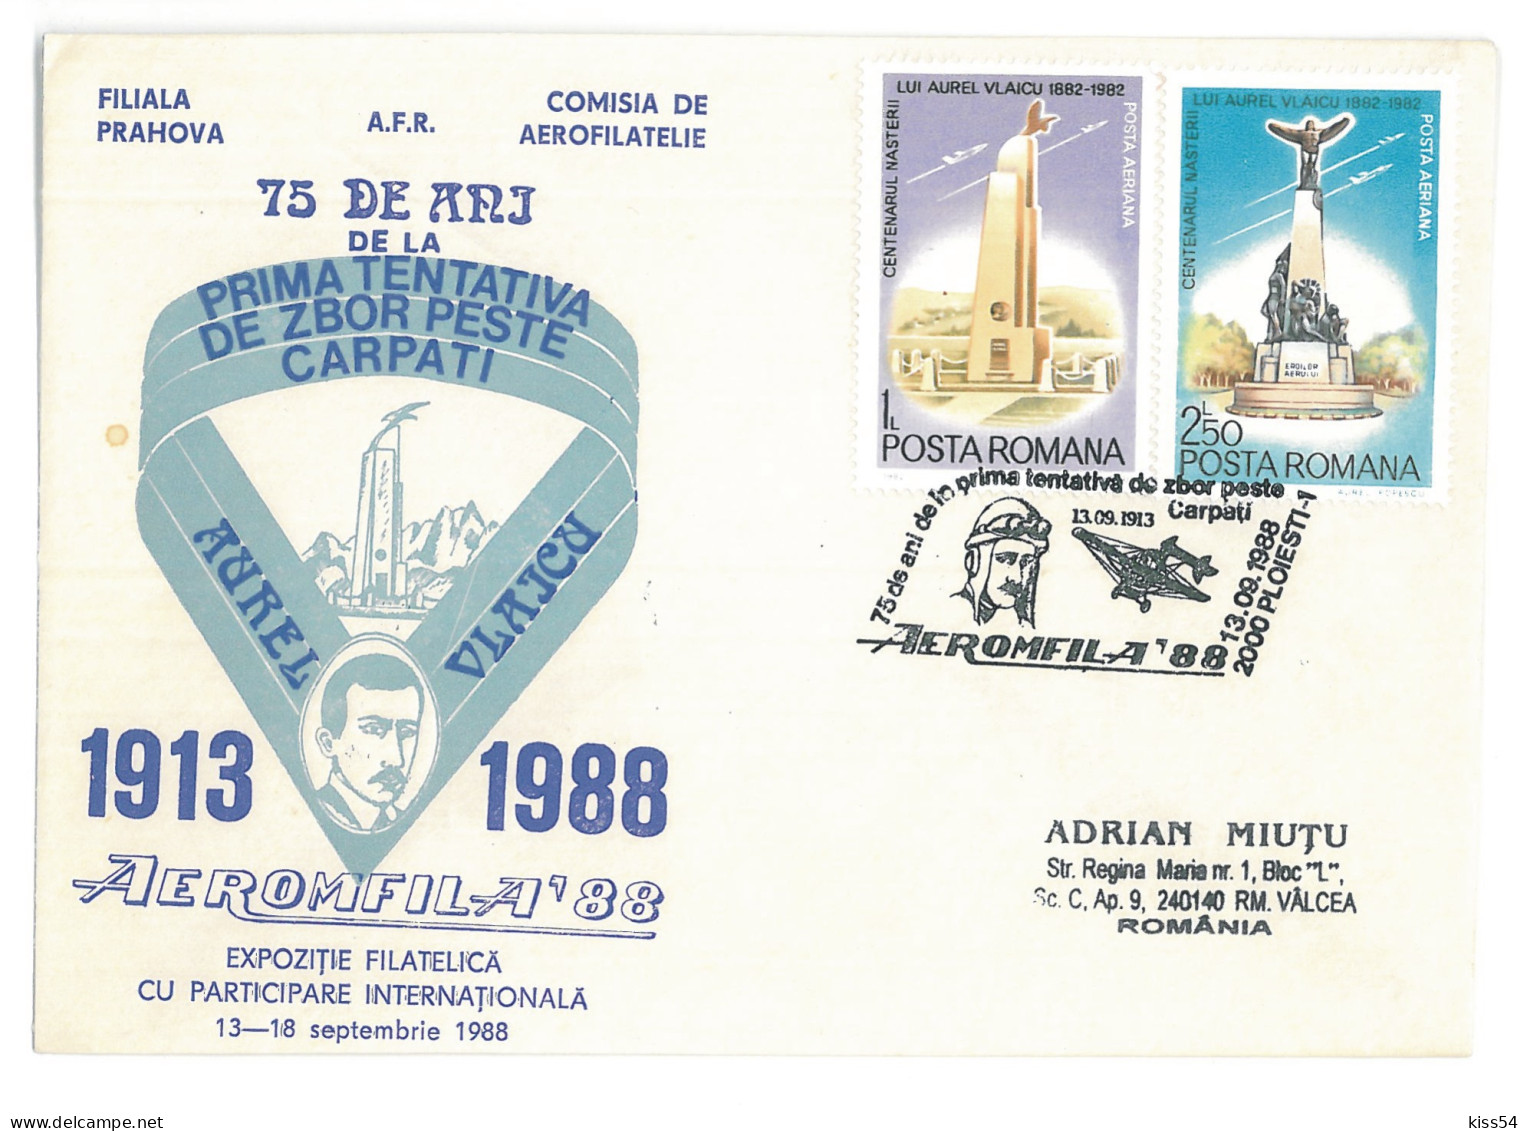 COV 75 - 329 AVIATIE, Aurel VLAICU, Ploiesti, Romania - Cover - Used - 1988 - Covers & Documents